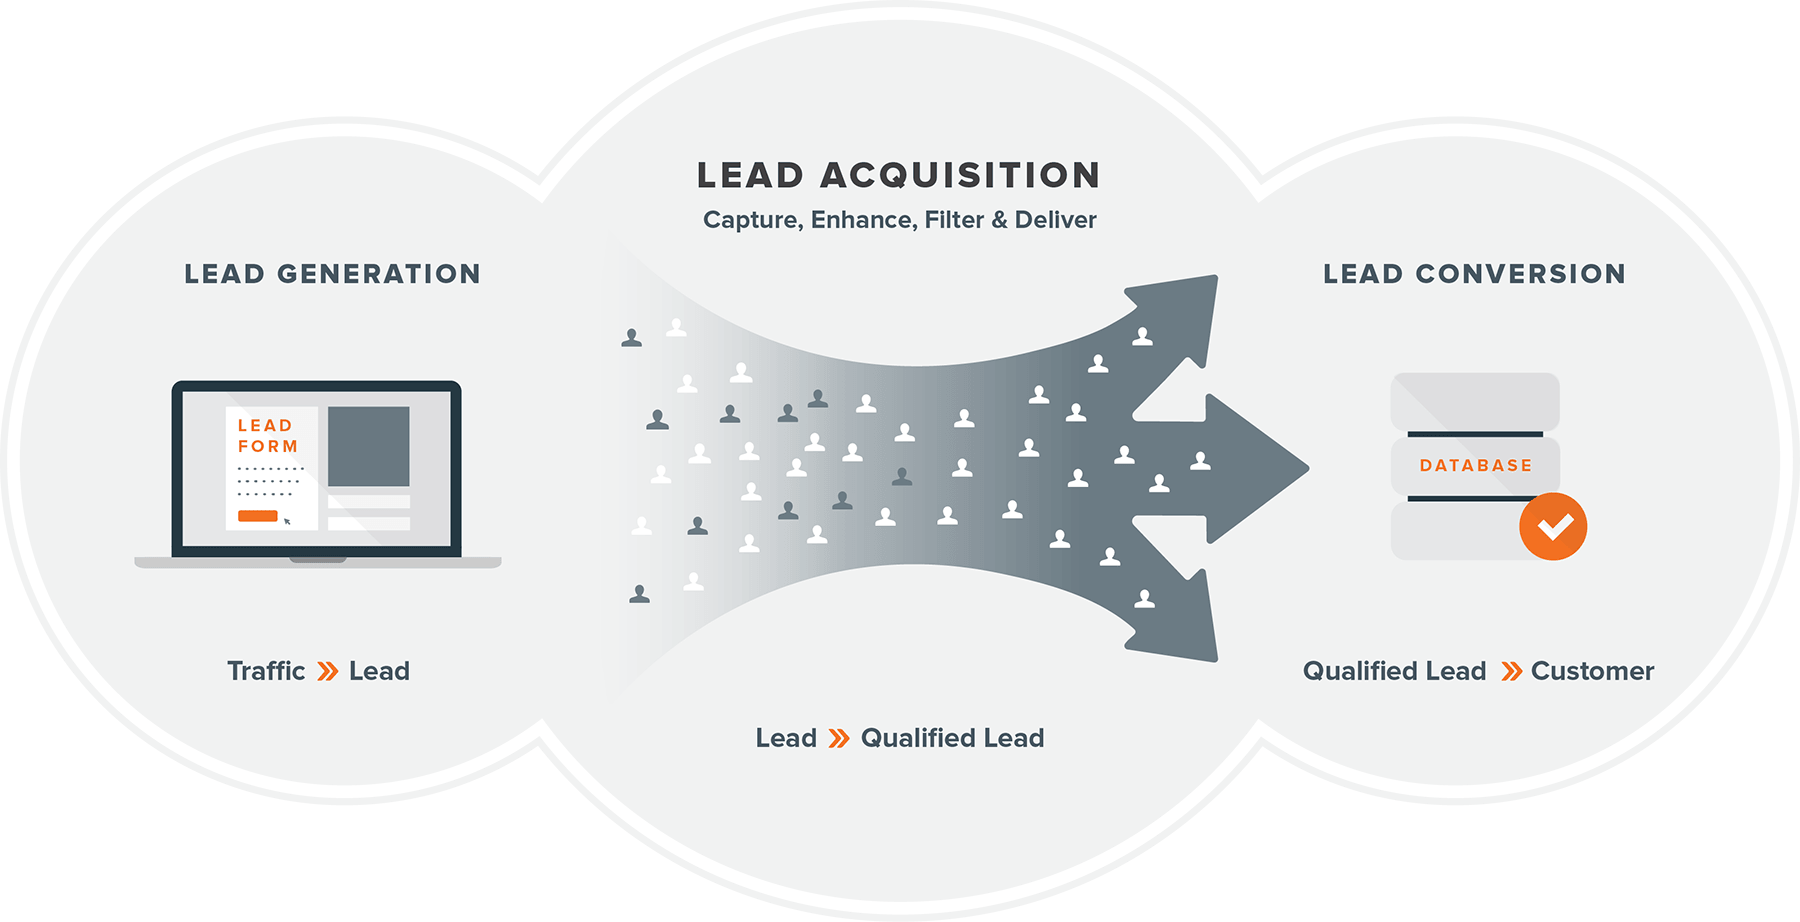 The Lead Acquisition Process